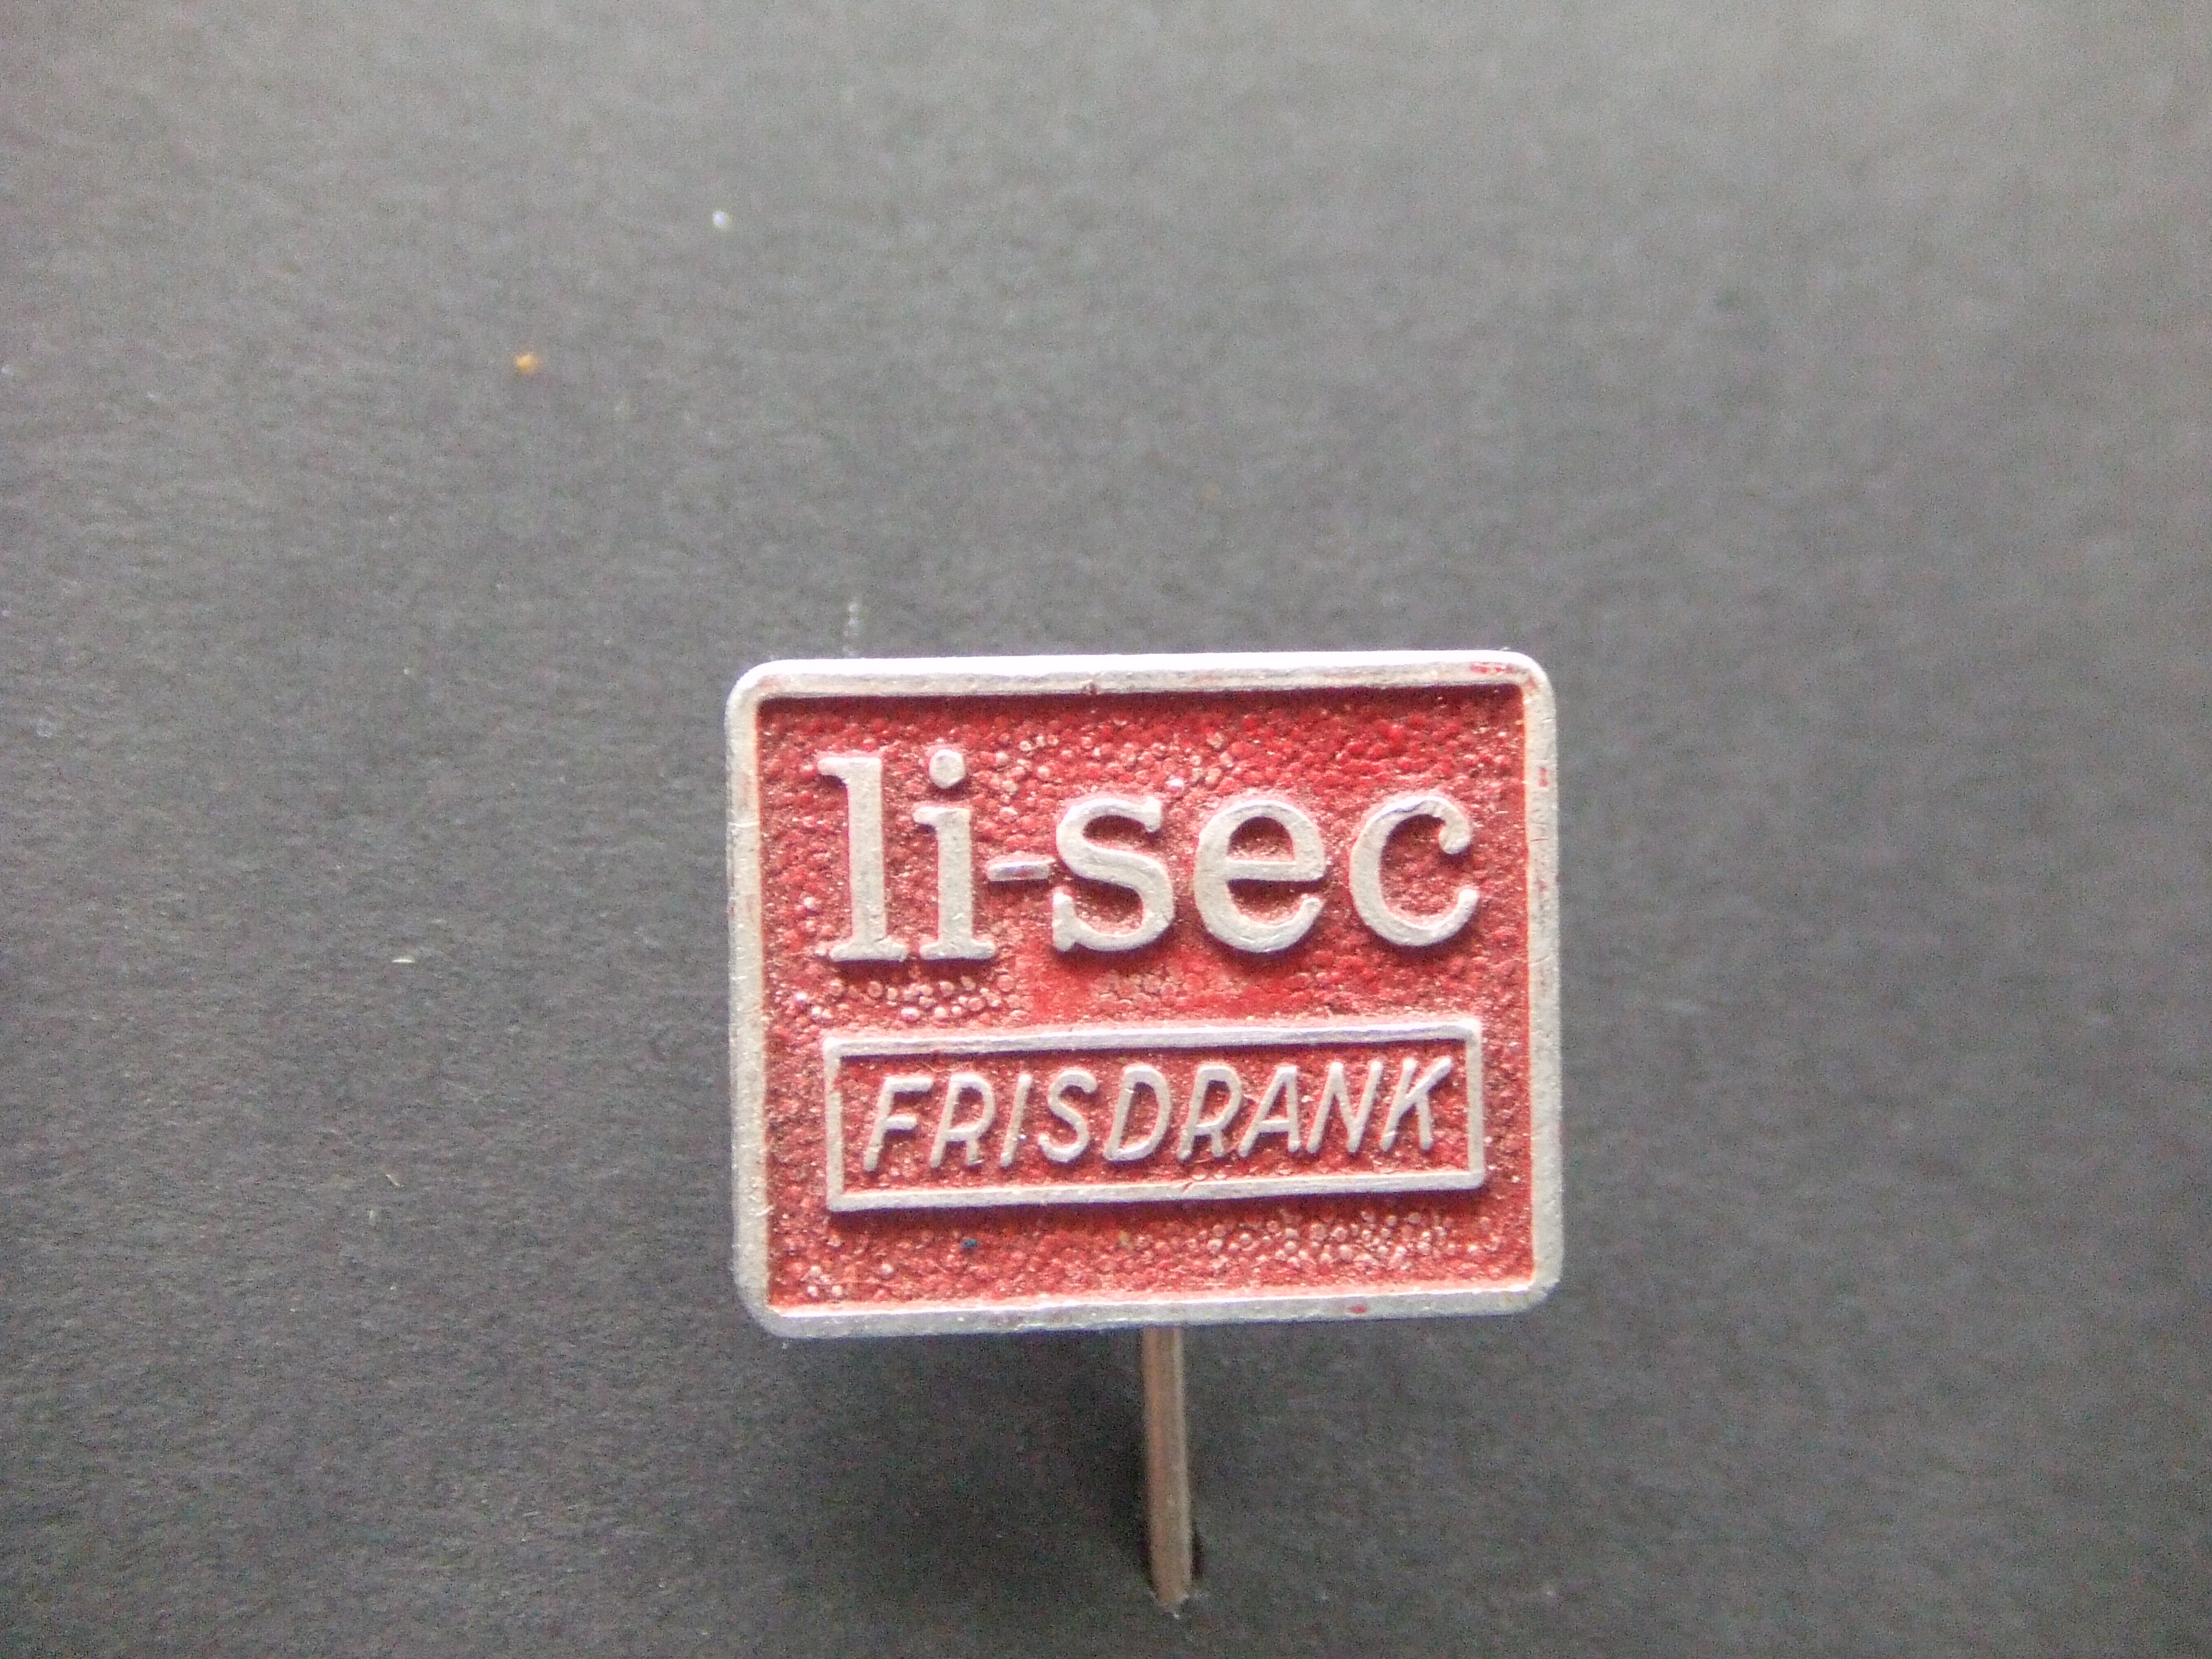 Li-sec frisdrank logo